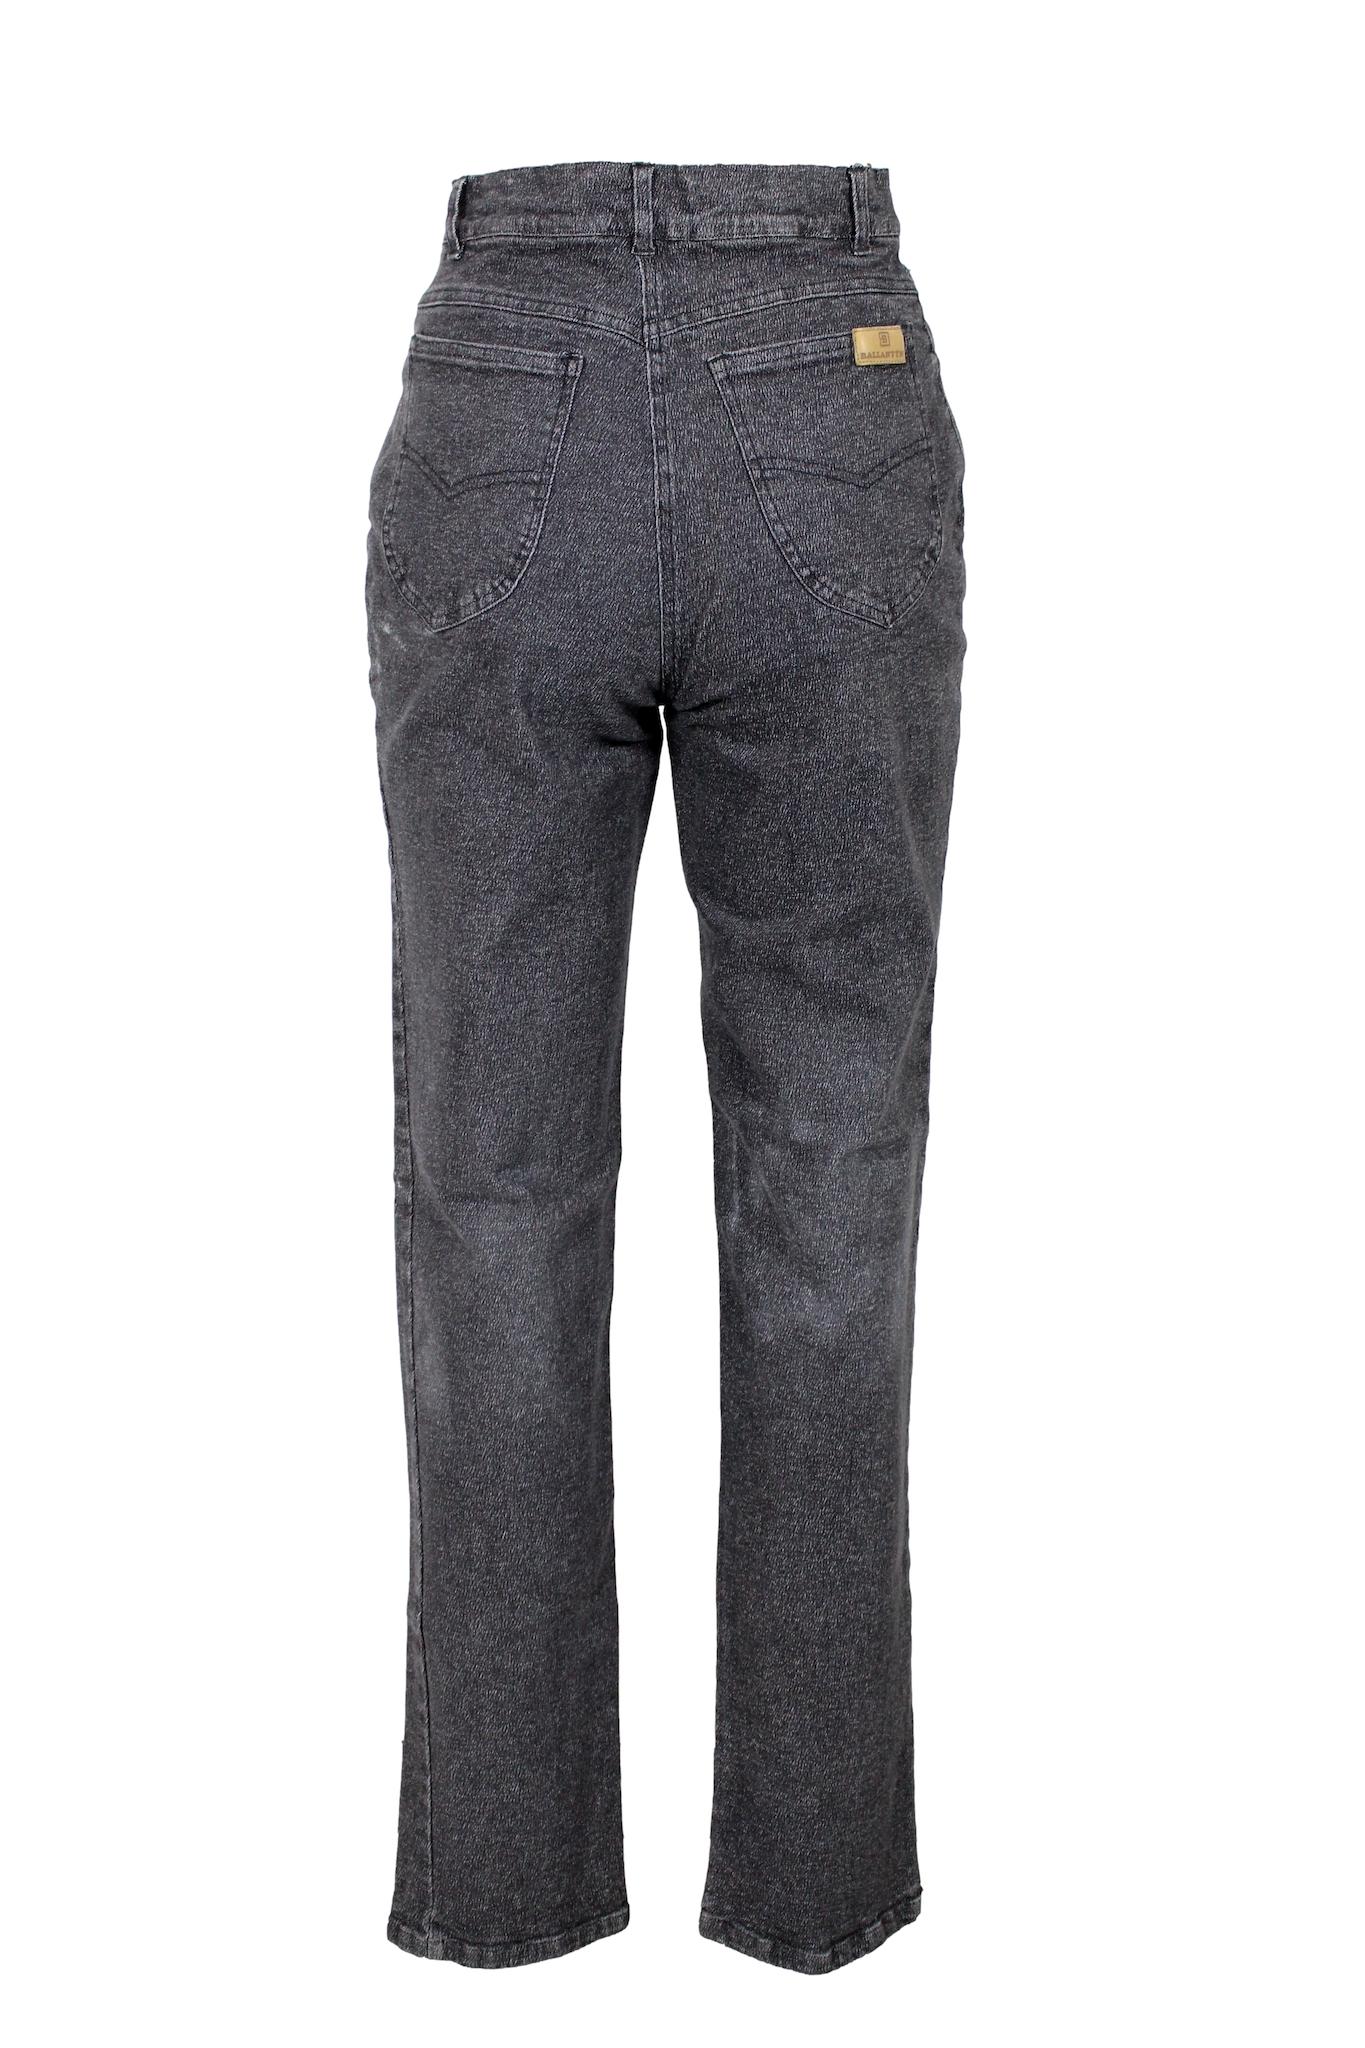 Ballantyne vintage 90s jeans trousers. Black color, 5-pocket model, high waist. Fabric 96% cotton, 2% elastane, 2% nylon. Made in Italy

Size: 42 It 8 Us 10 Uk

Waist: 31cm
Length: 110cm
Hem: 18cm
Pant crotch: 83 cm